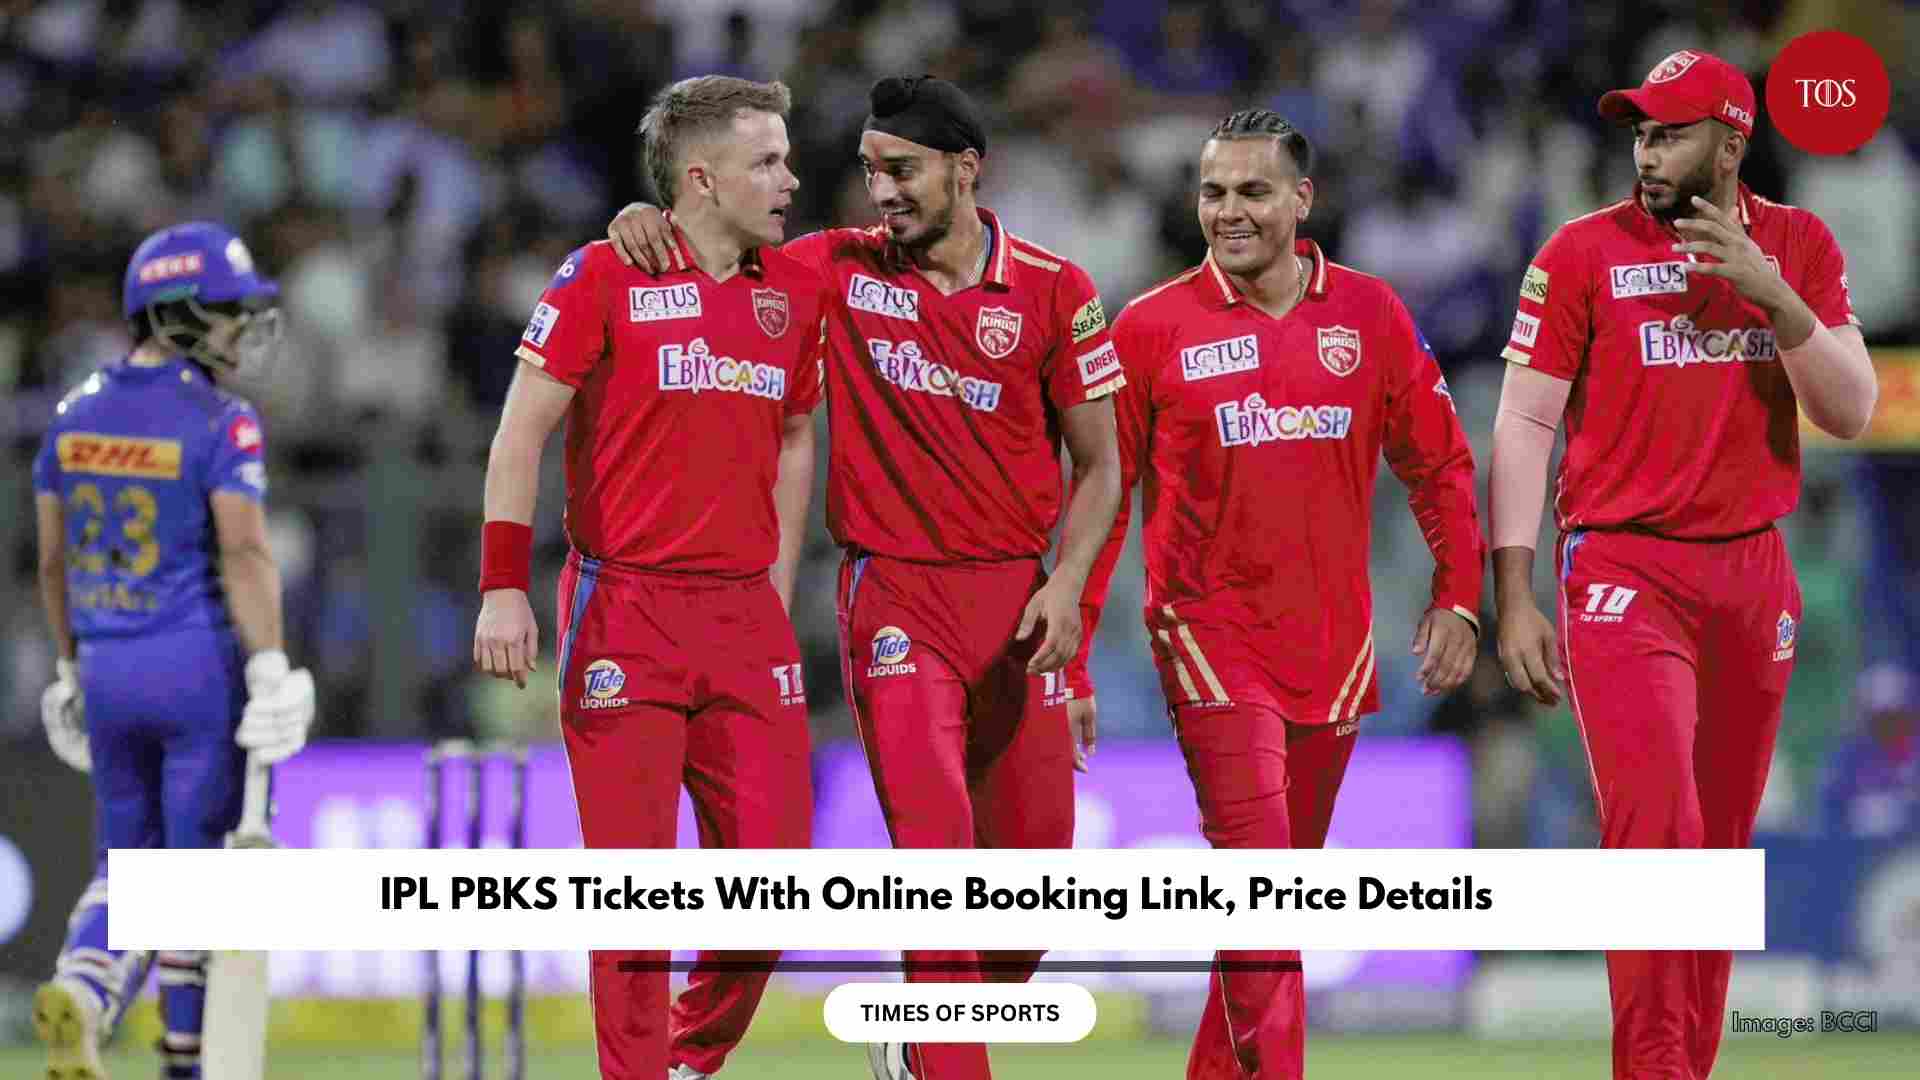 IPL PBKS Tickets